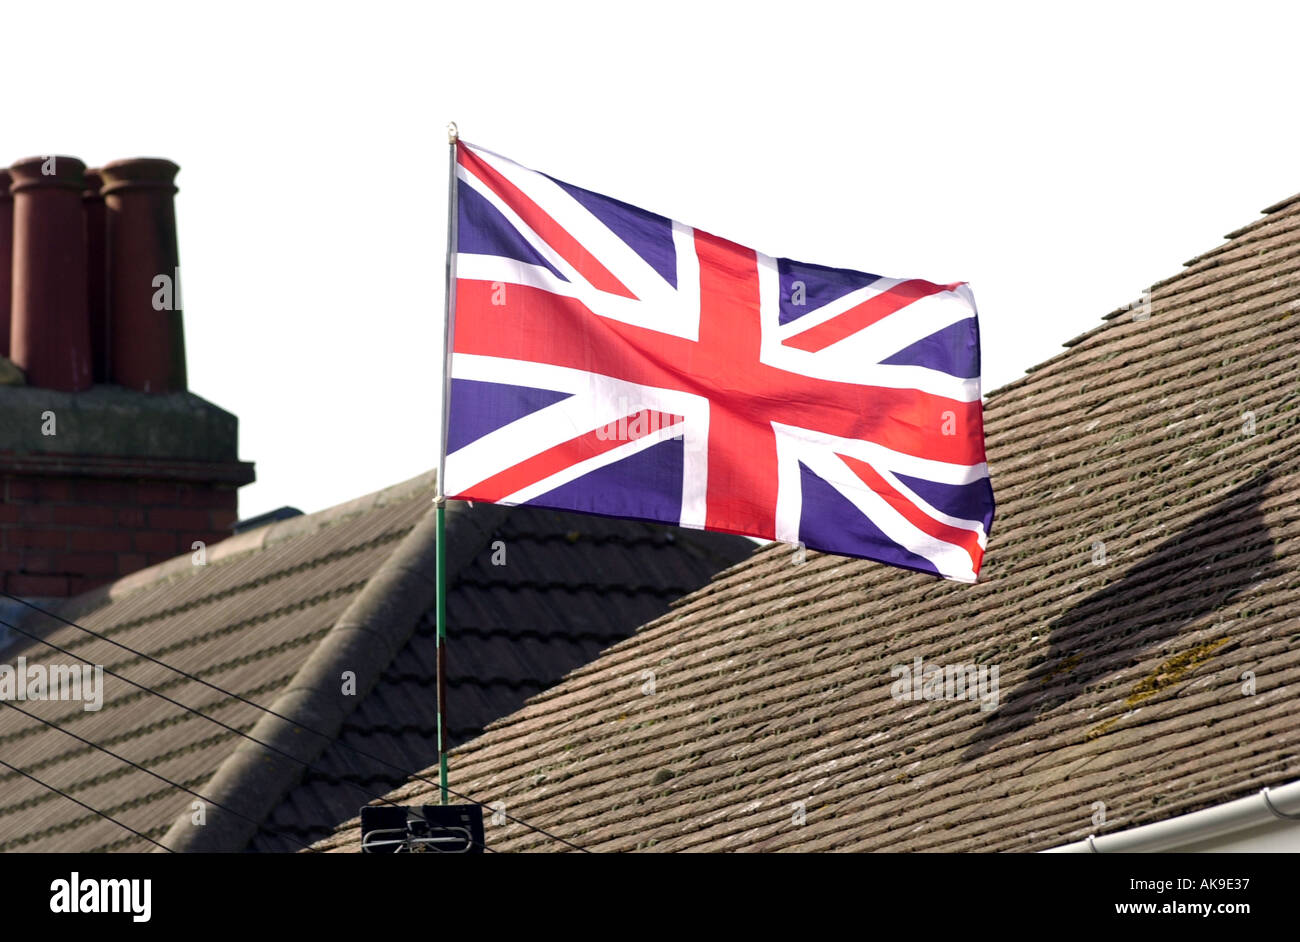 Union flag flies above a house UK Stock Photo